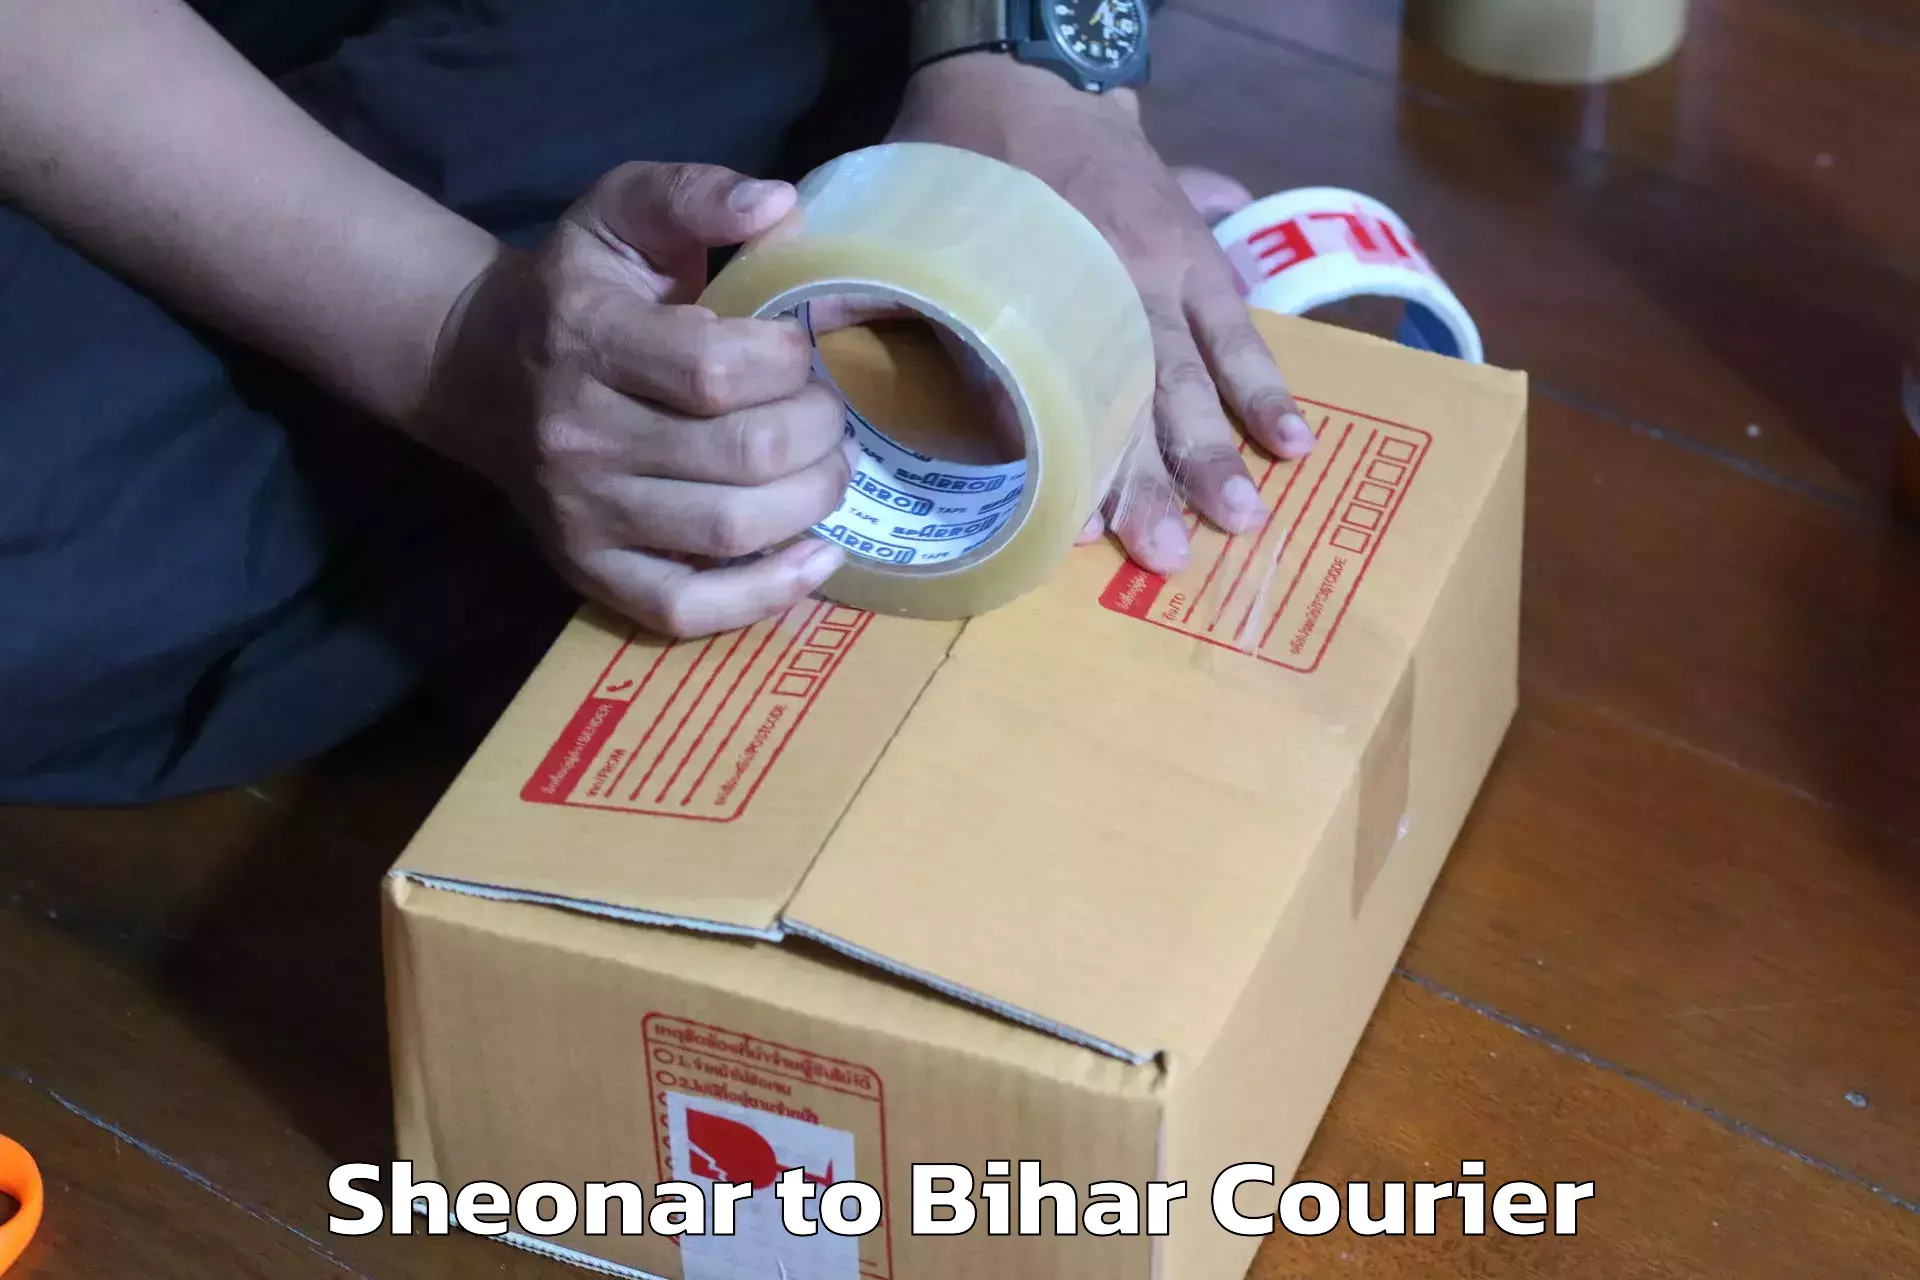 Professional moving company Sheonar to Goh Aurangabad